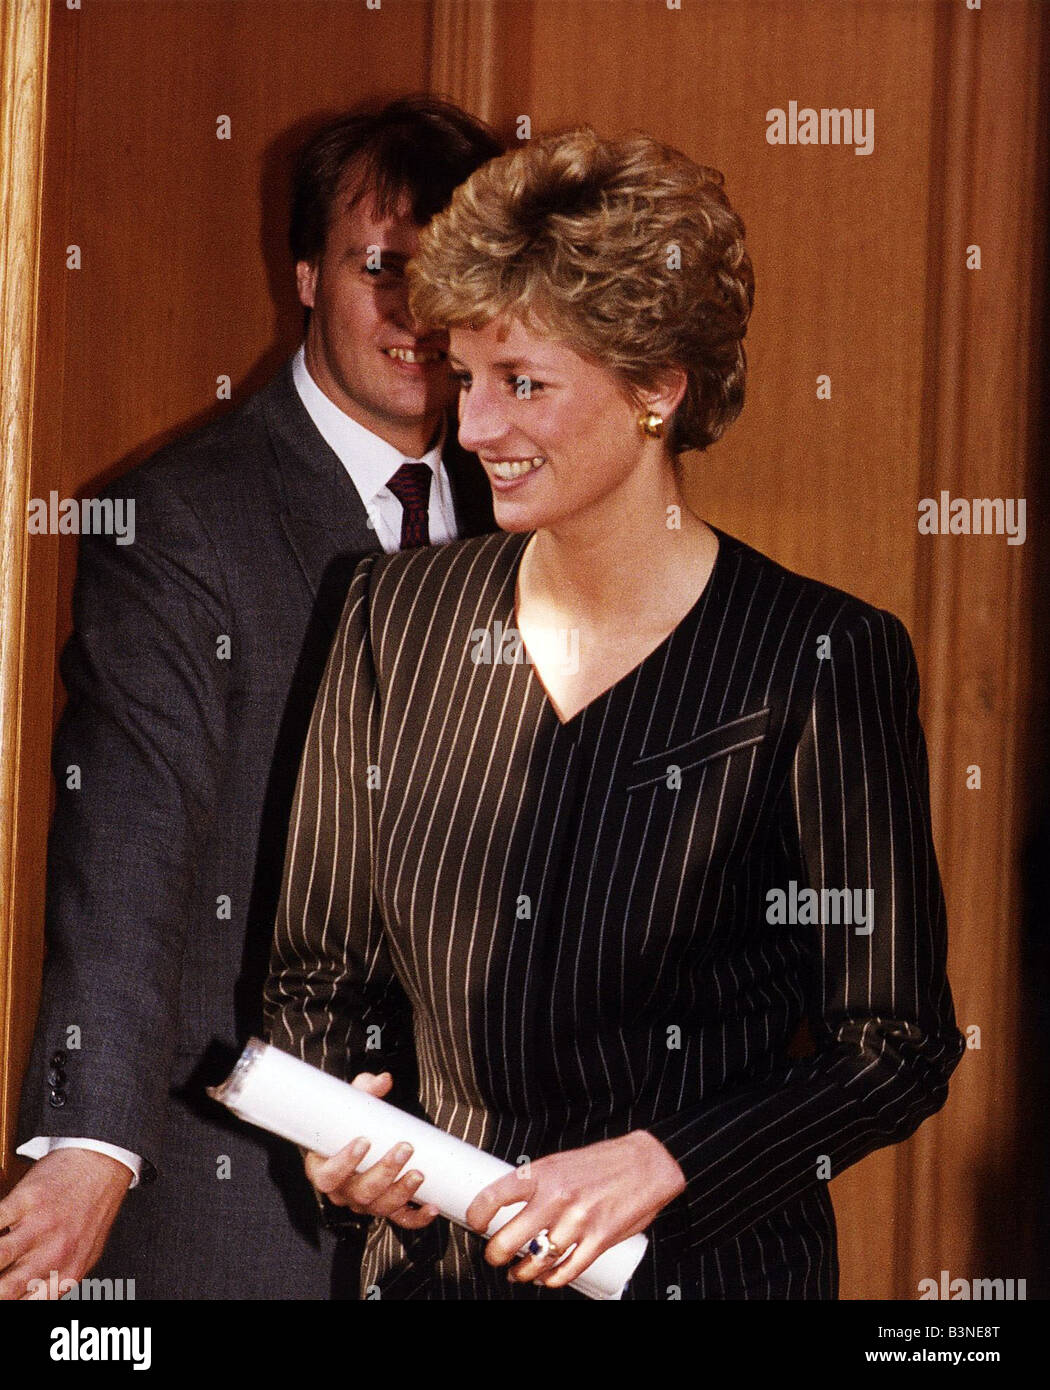 Princess Diana Royalty at the Regents Hotel November 1993 Stock Photo ...